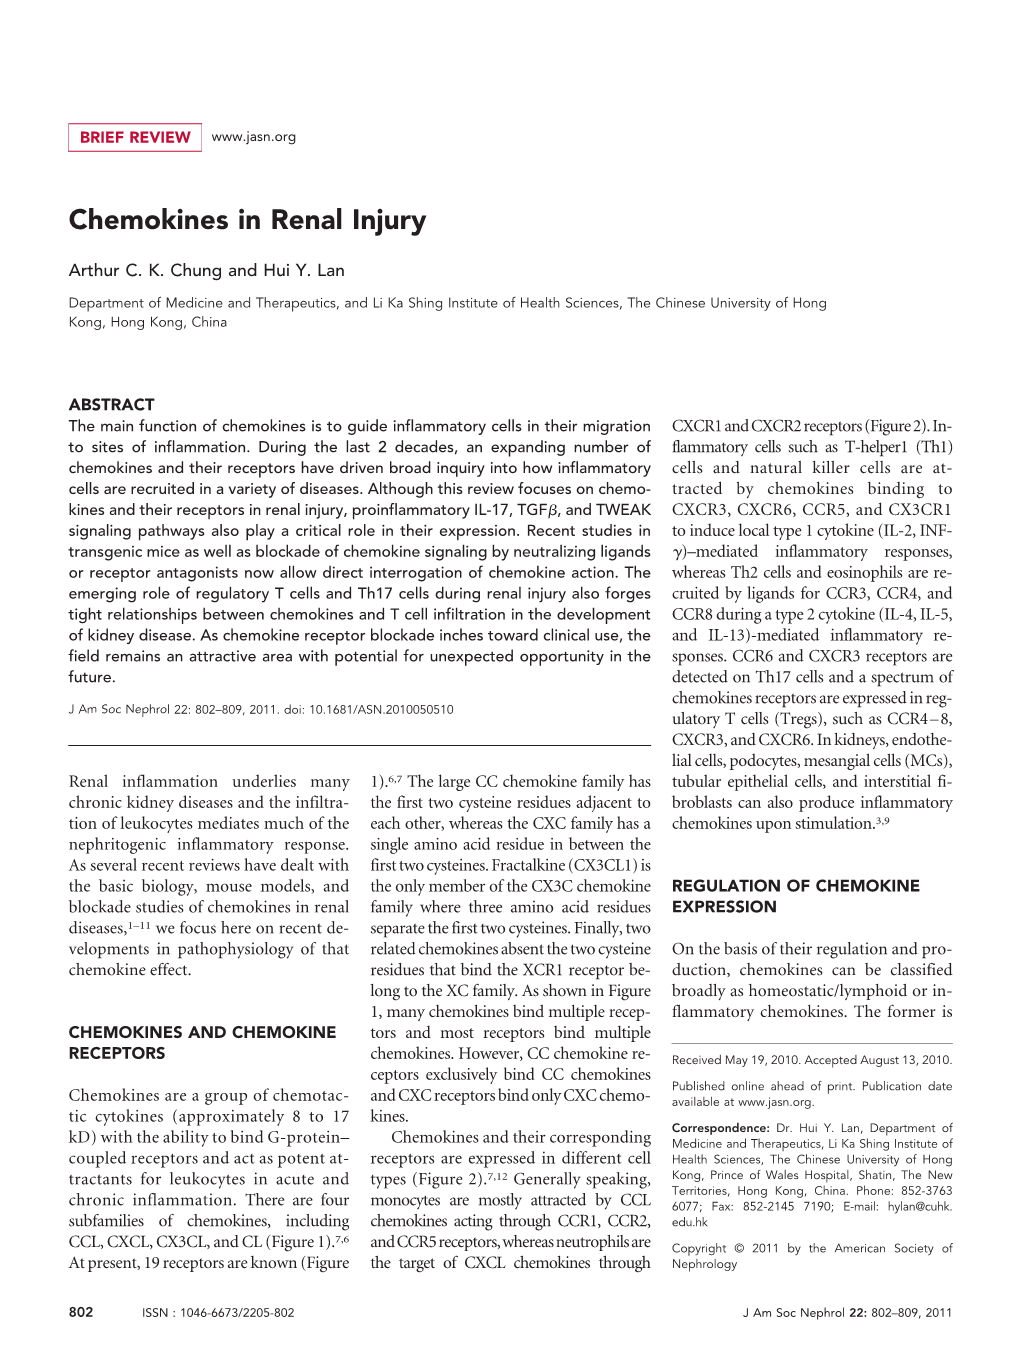 Chemokines in Renal Injury